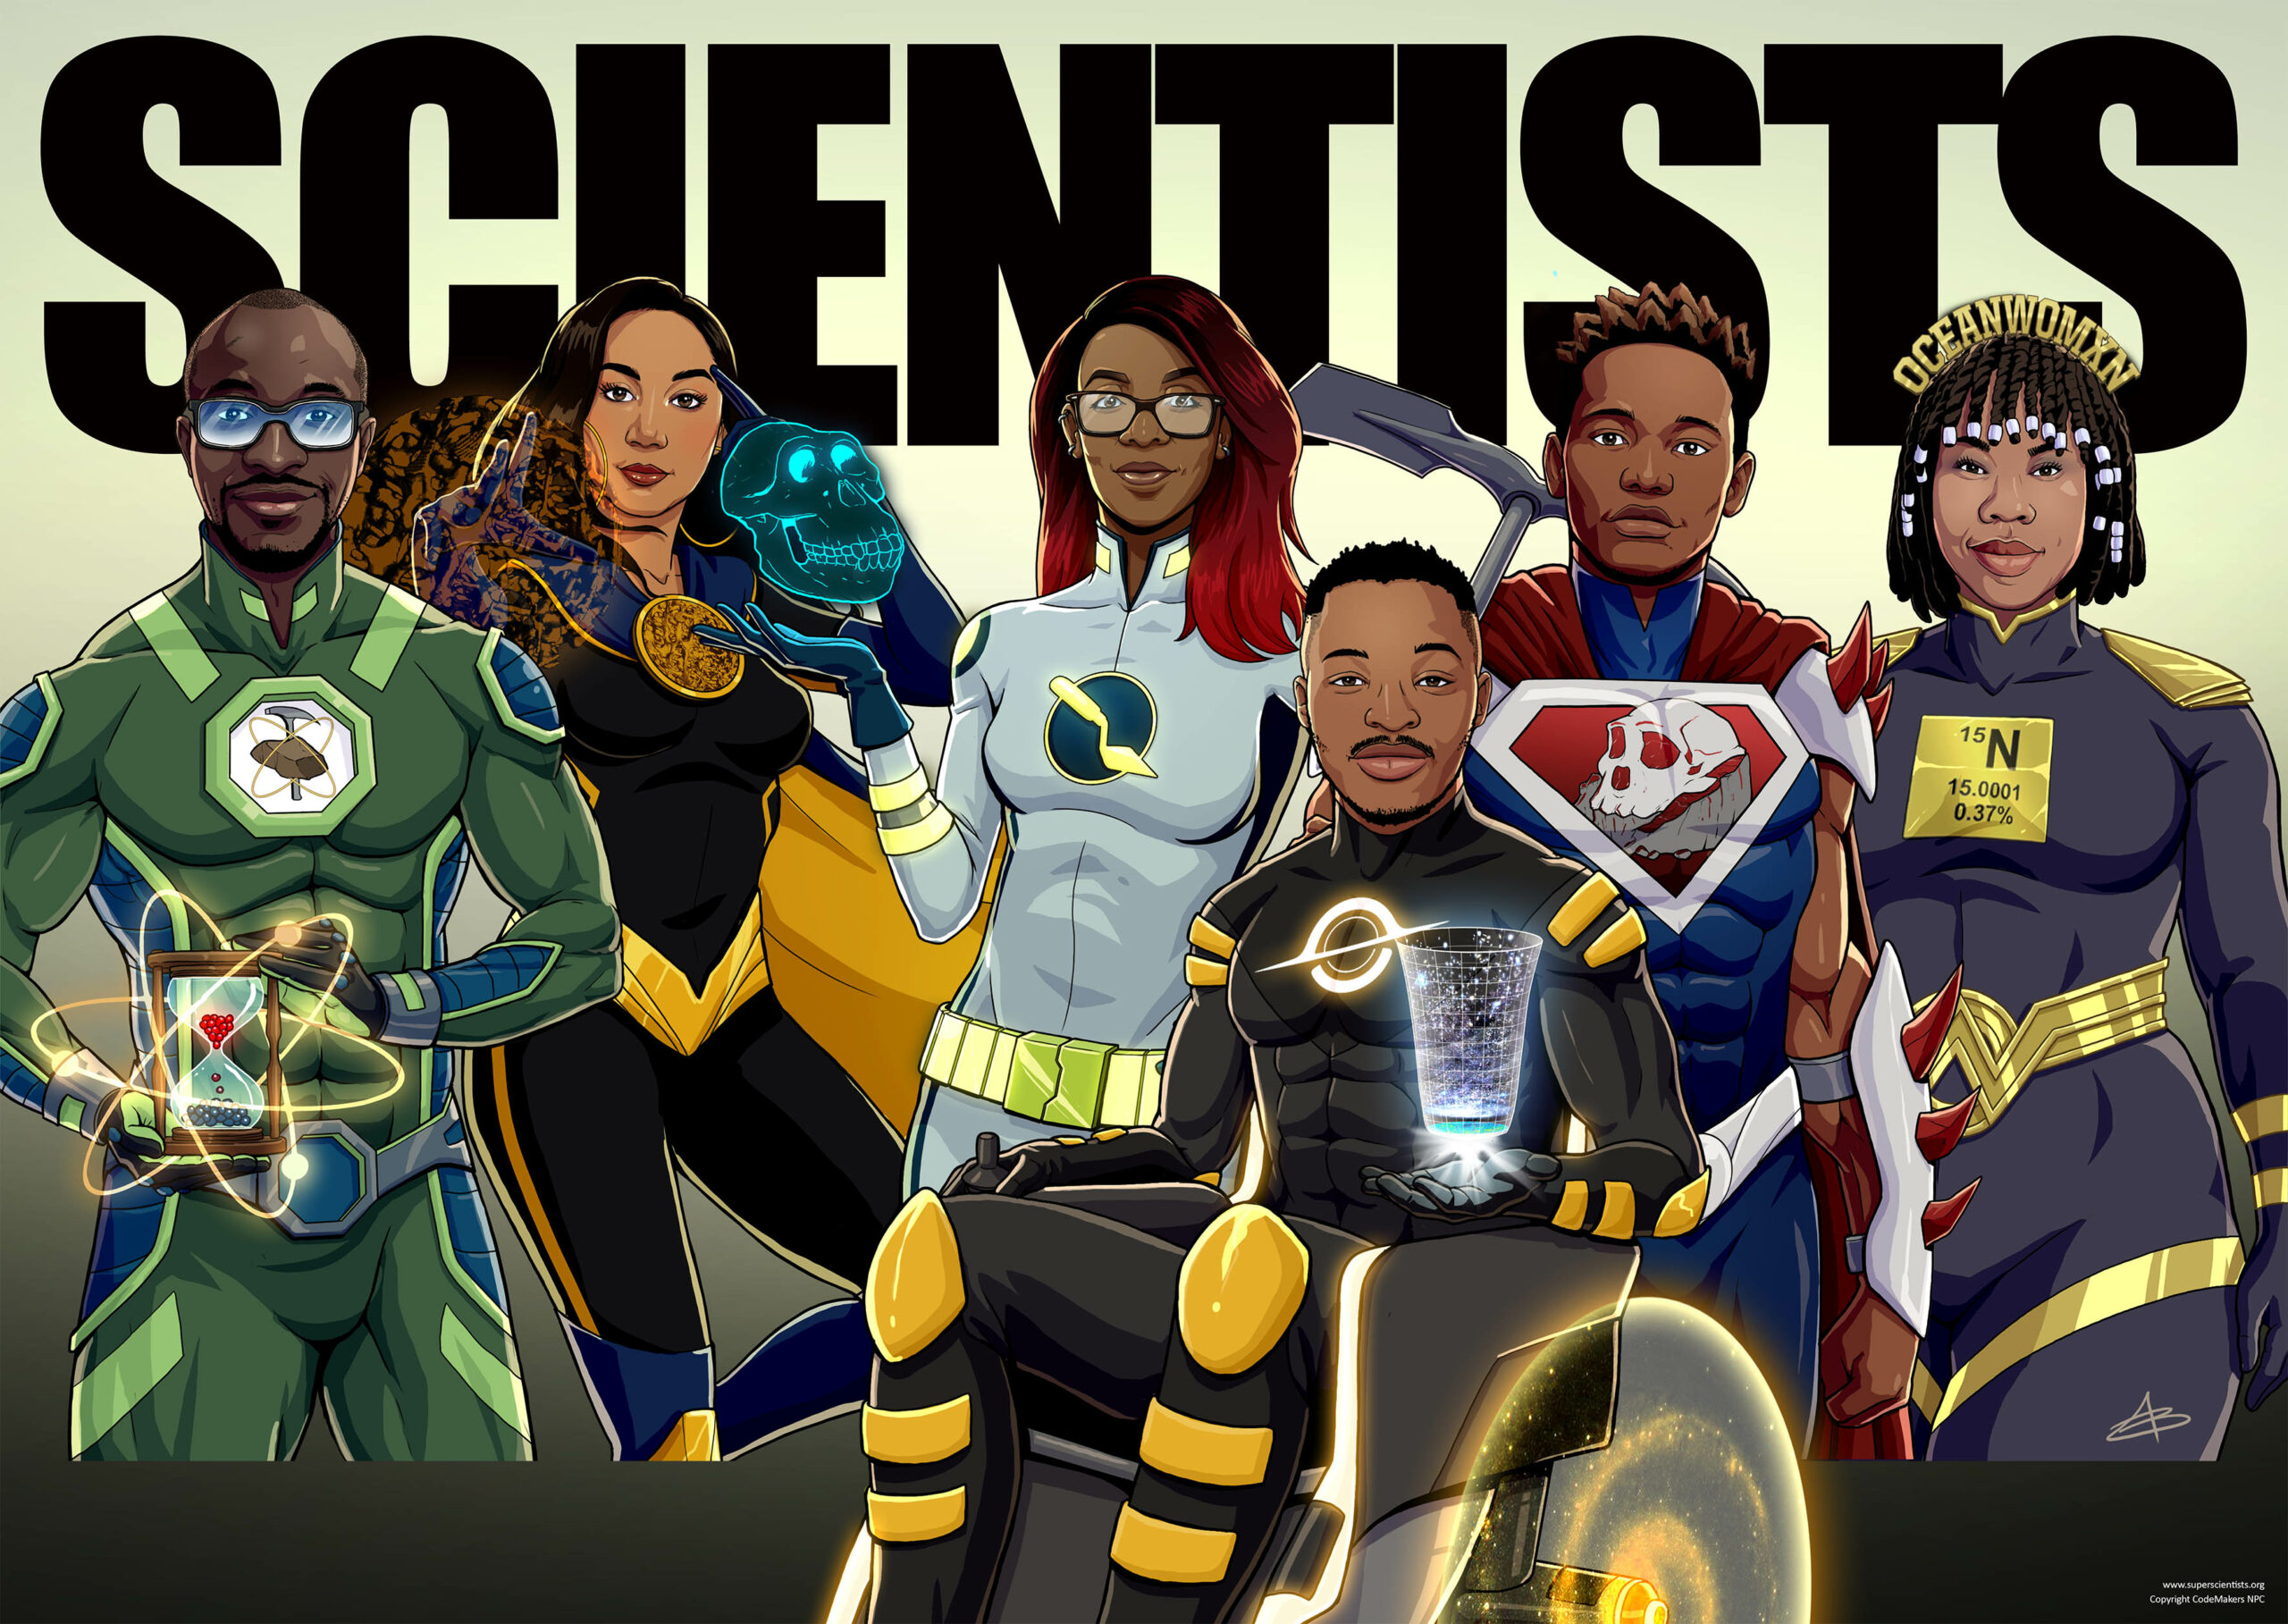 Meet South Africa's Superhero scientists Cosmic Dawn, Bones and